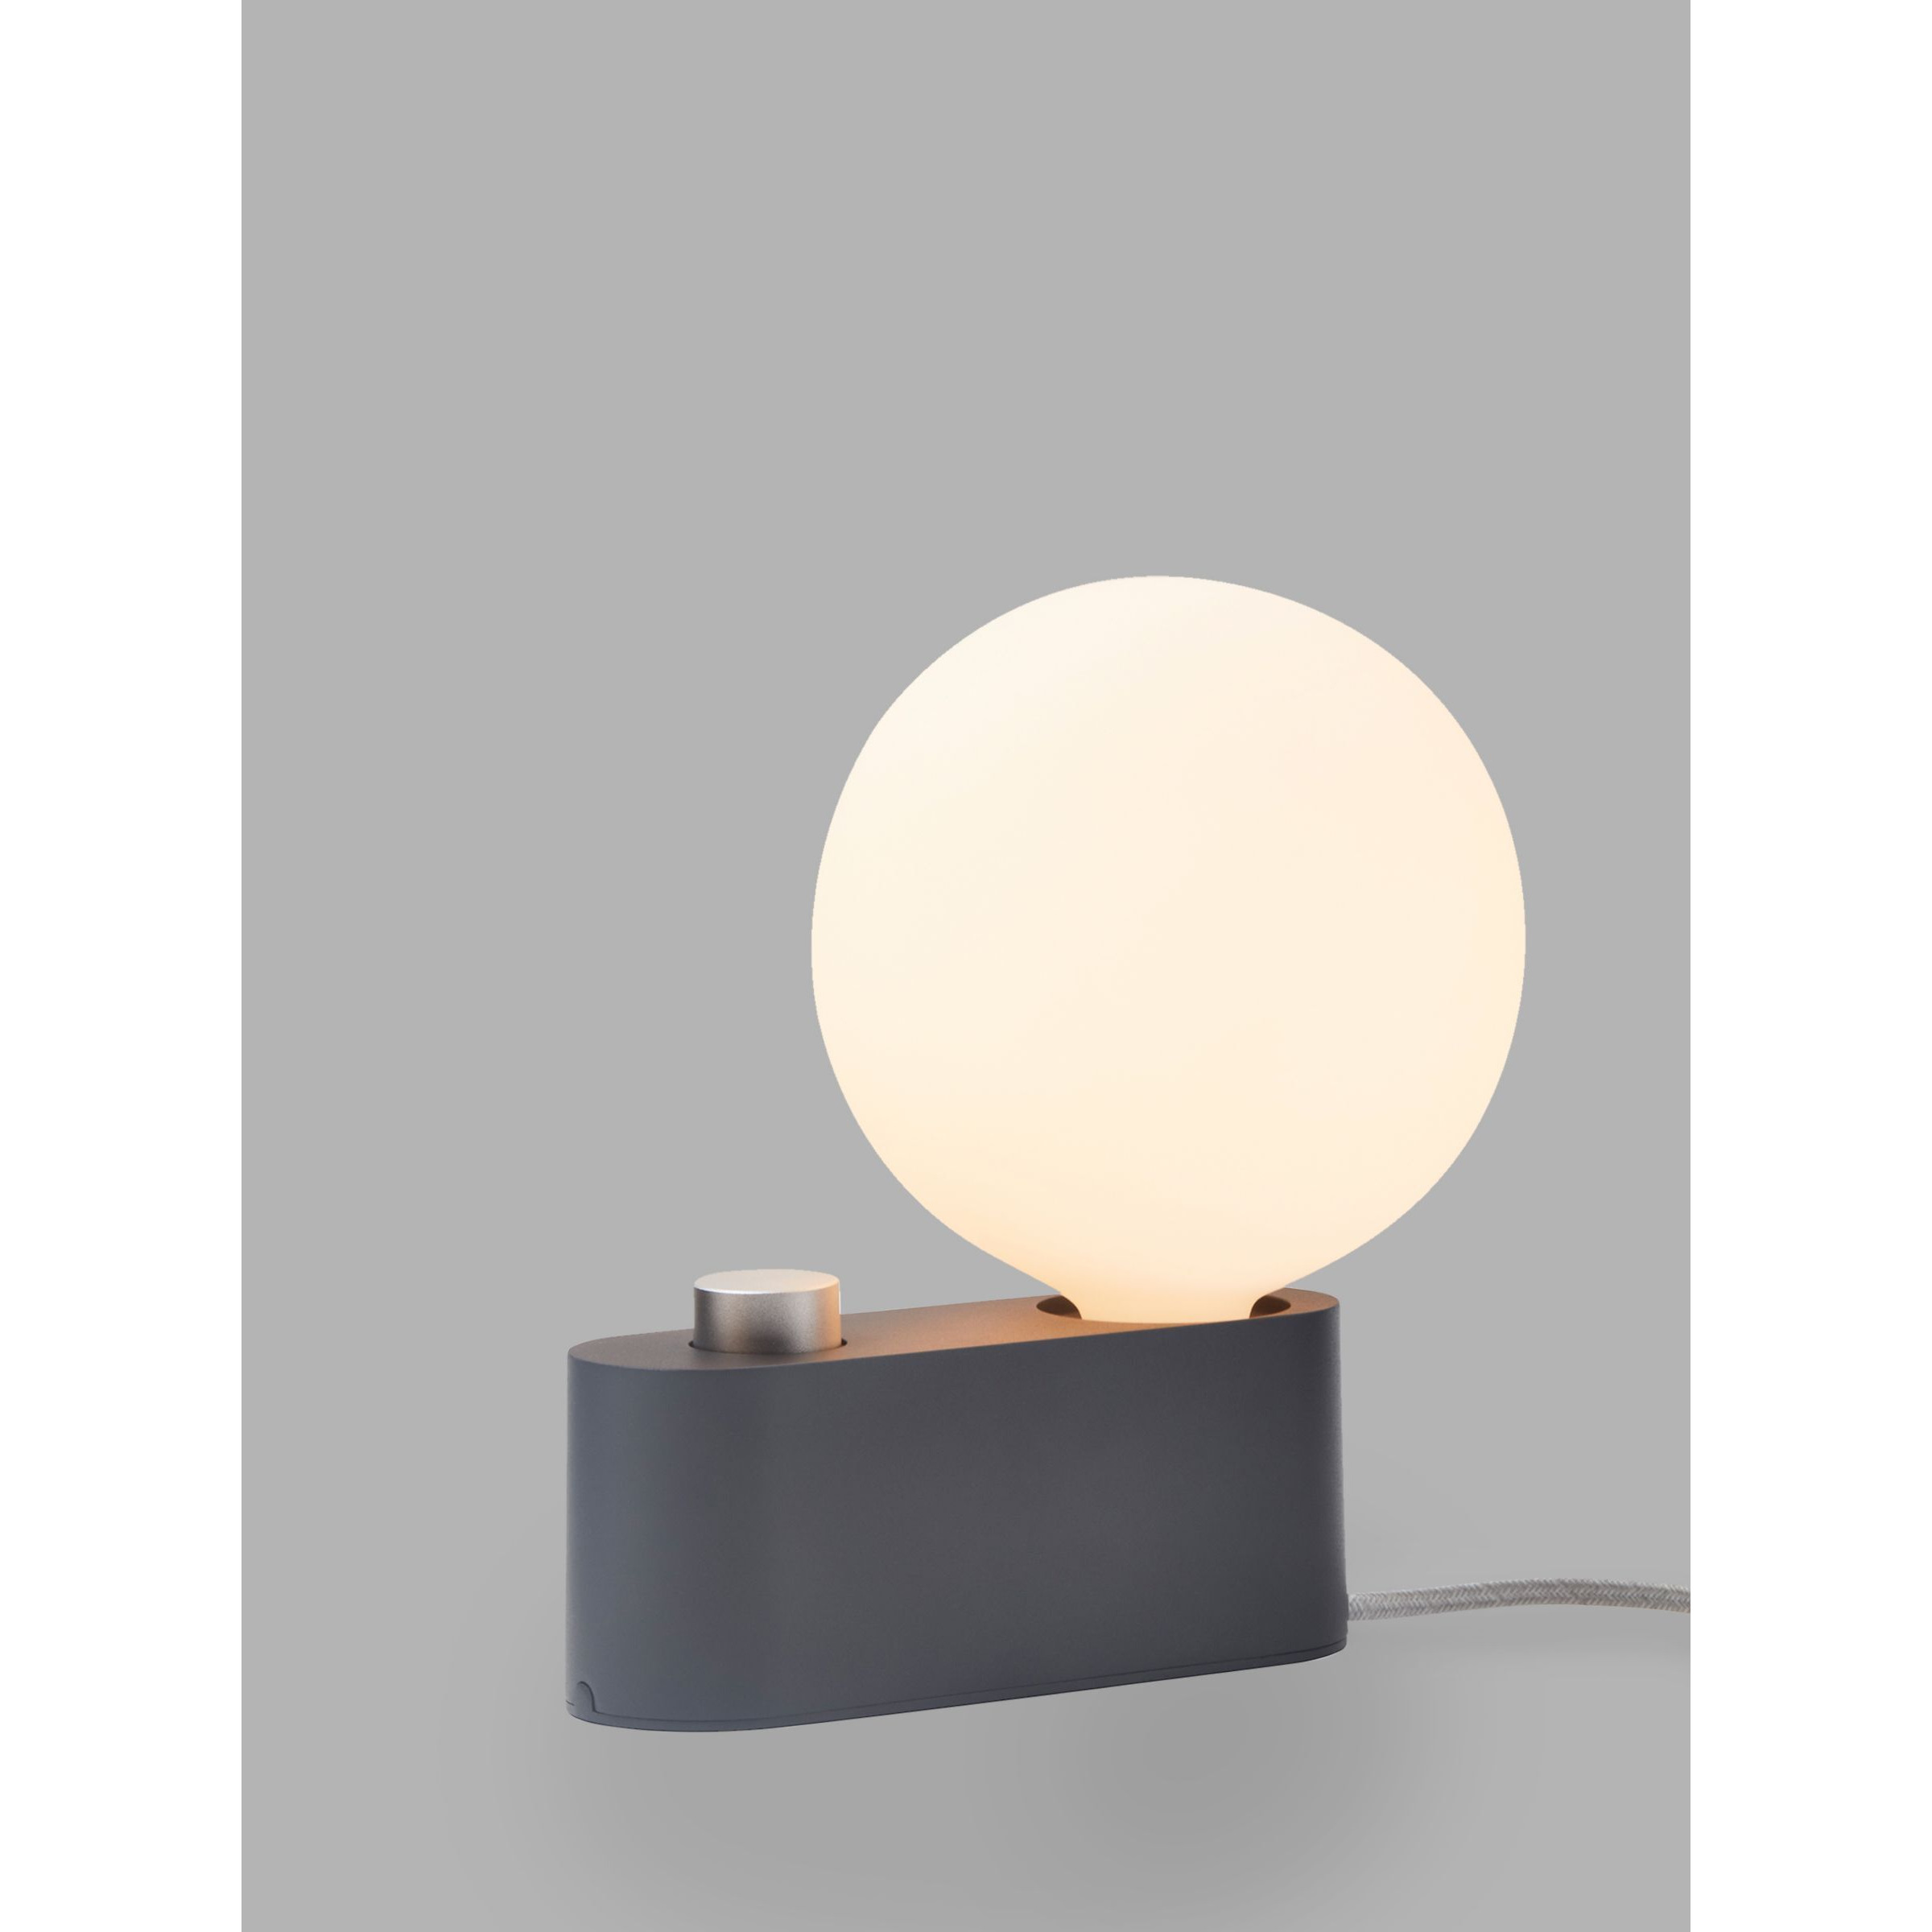 Tala Alumina Table/Wall Lamp with Sphere IV ES LED Dim to Warm Globe Bulb - image 1